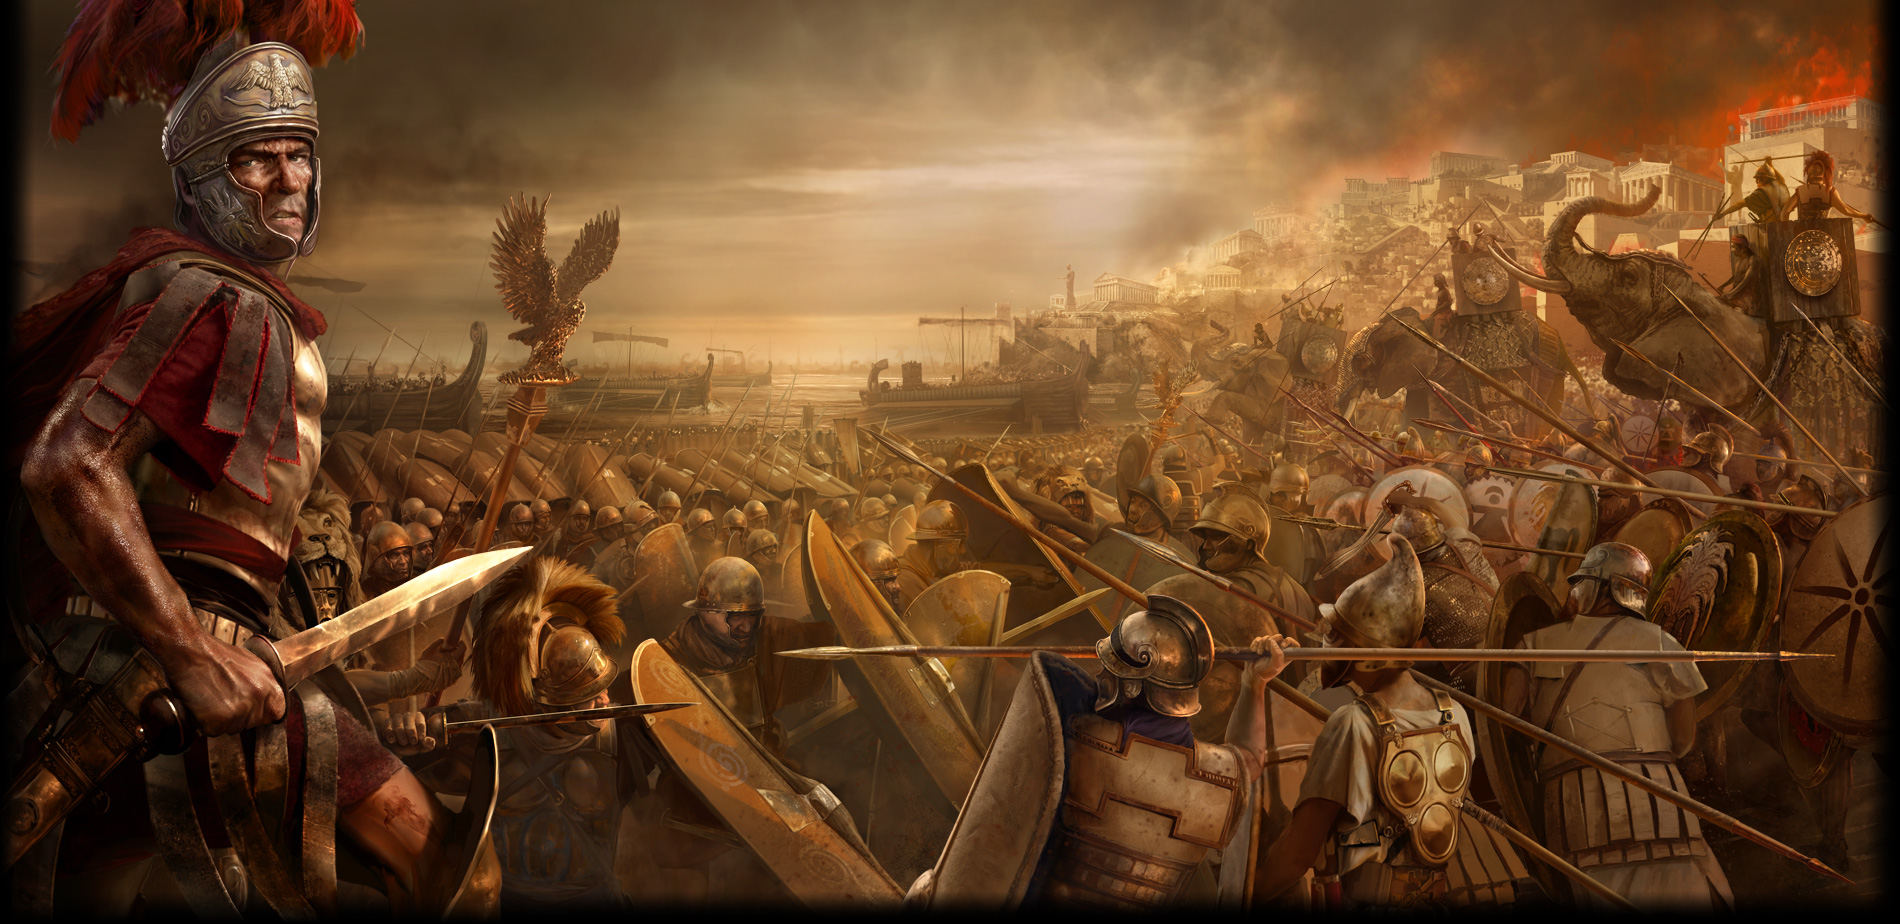  Sega fantasy roman army warrior warriors battle wallpaper background